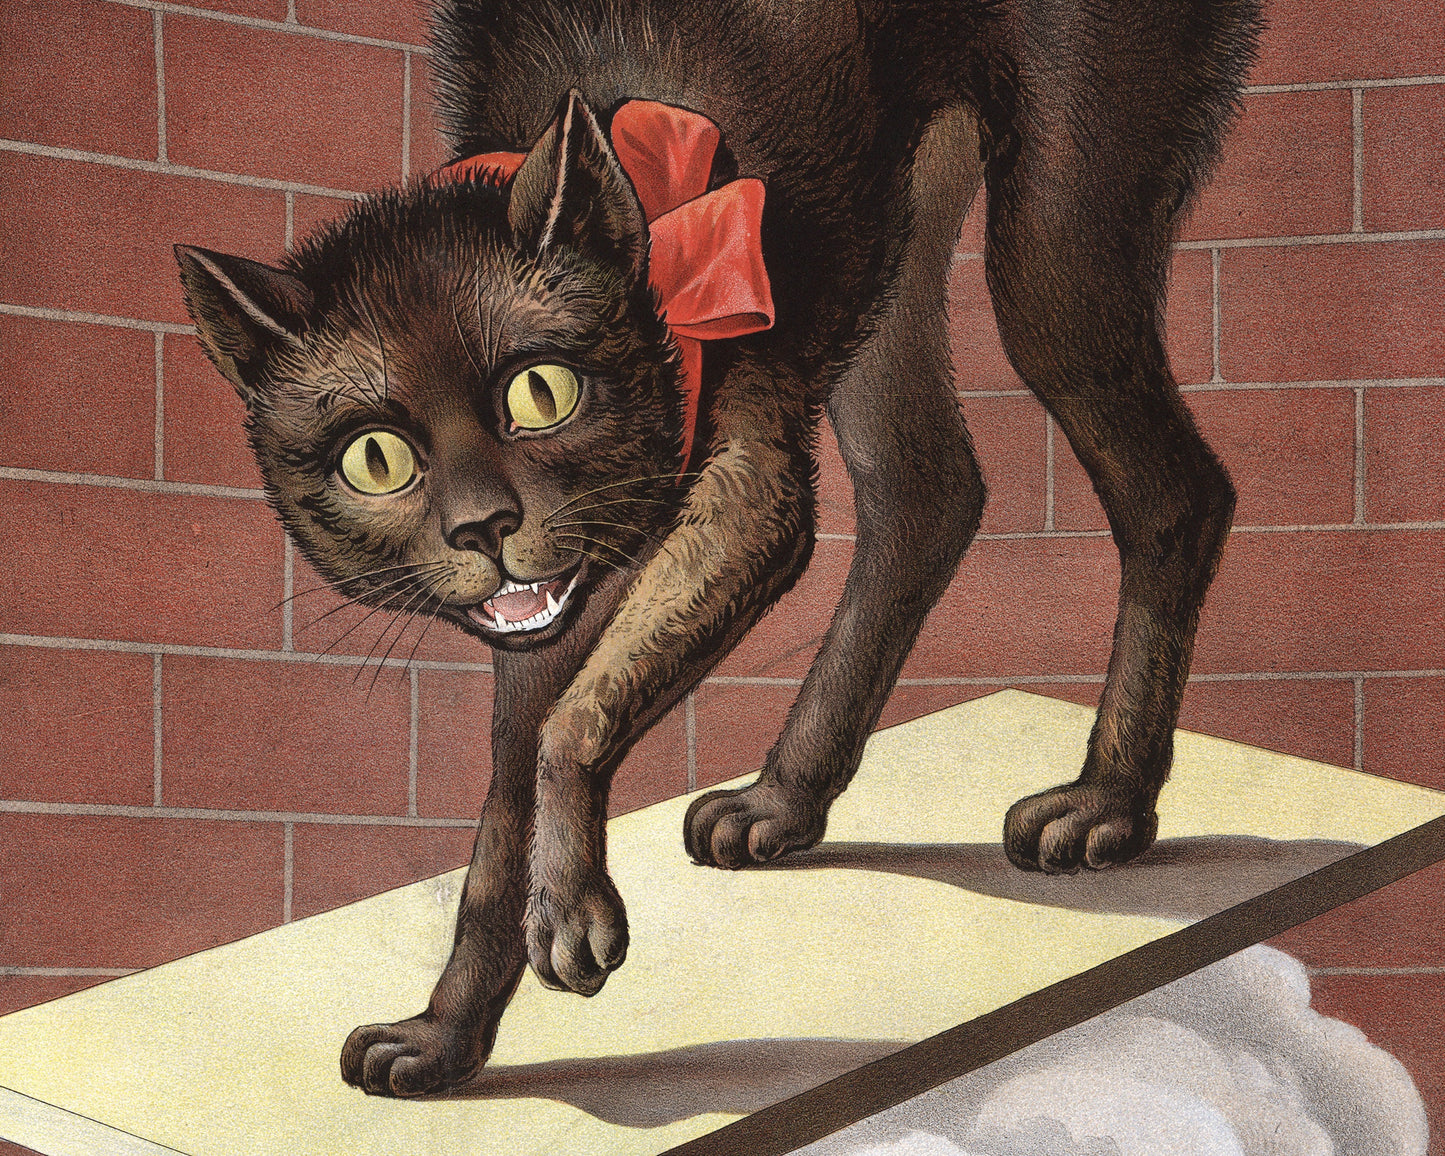 Vintage baking advertisement | Black tom cat in the kitchen | International baking soda | Cafe kitchen wall art | Modern vintage décor